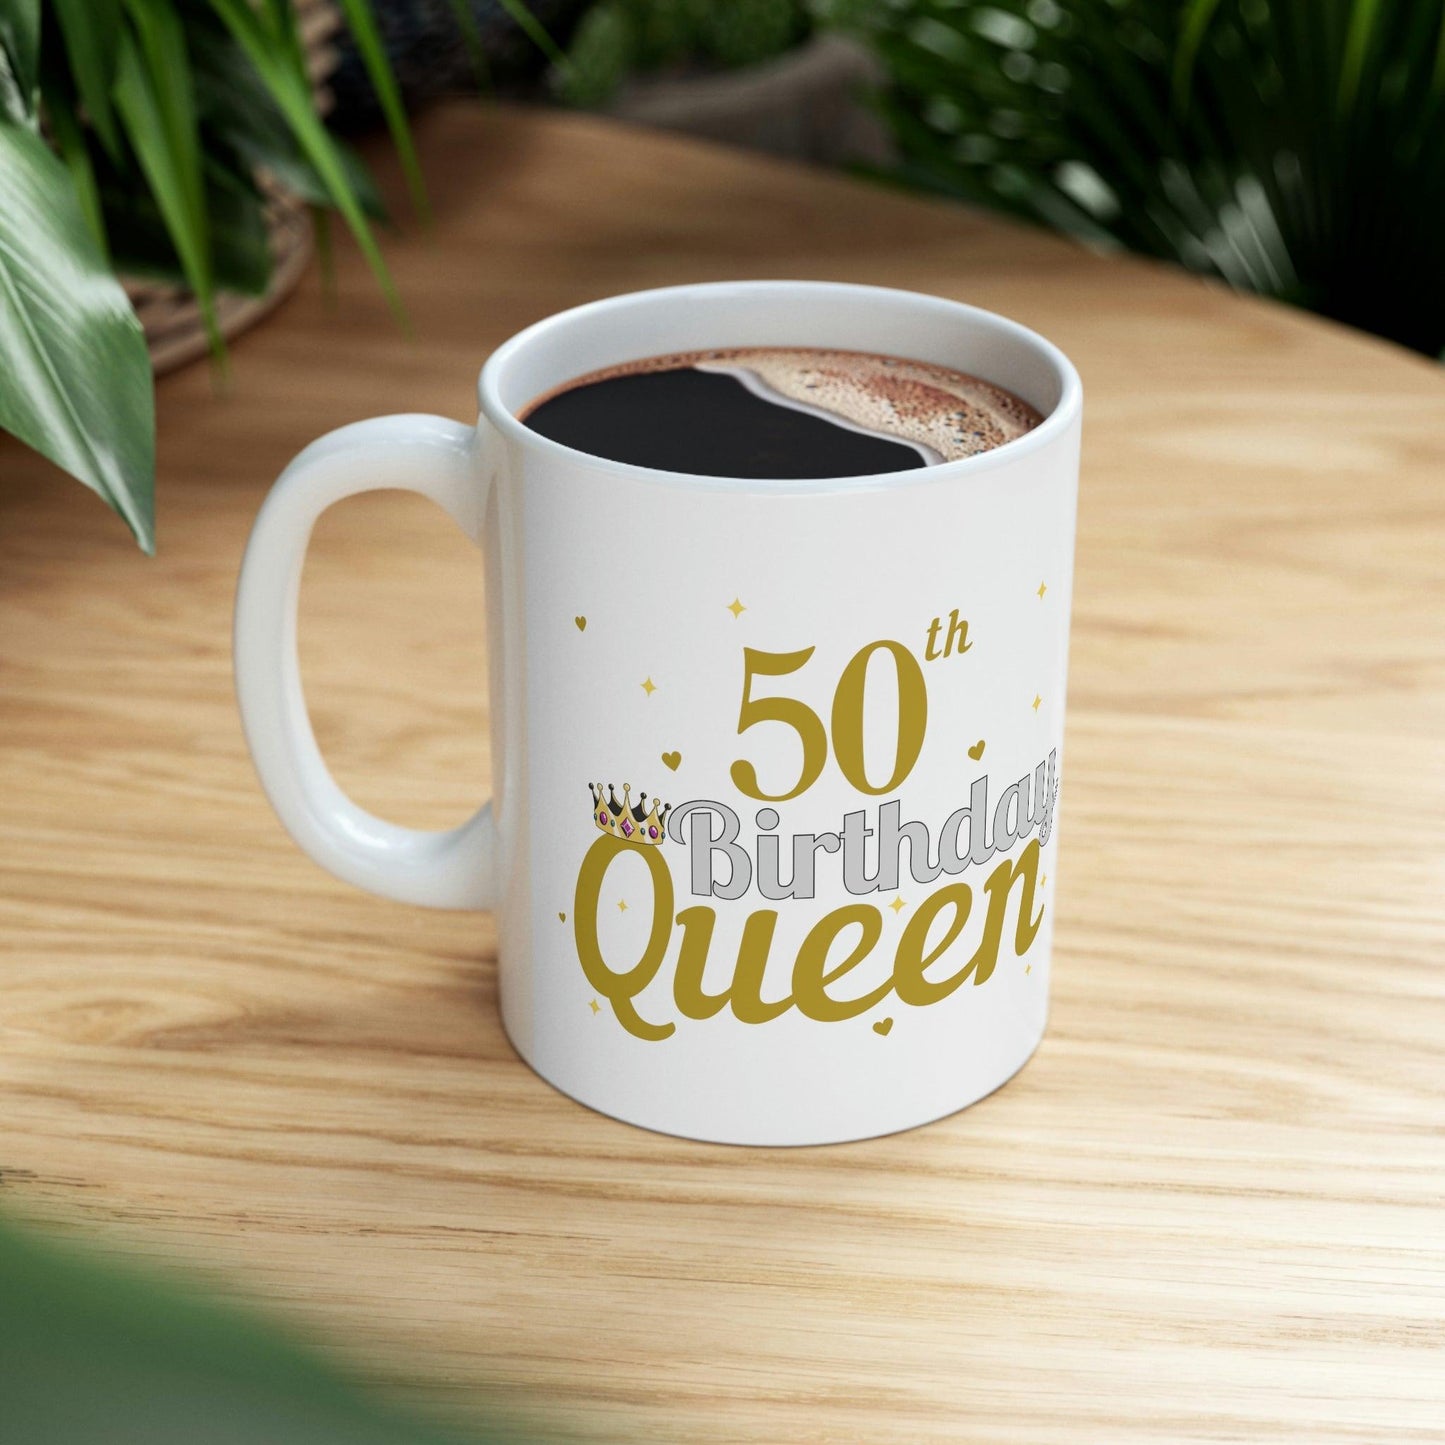 50th birthday queen Mug, gift for mom, Birthday gift for mom, birthday mug, coffee mug for her, hot cocoa mug, gift for coffee lover